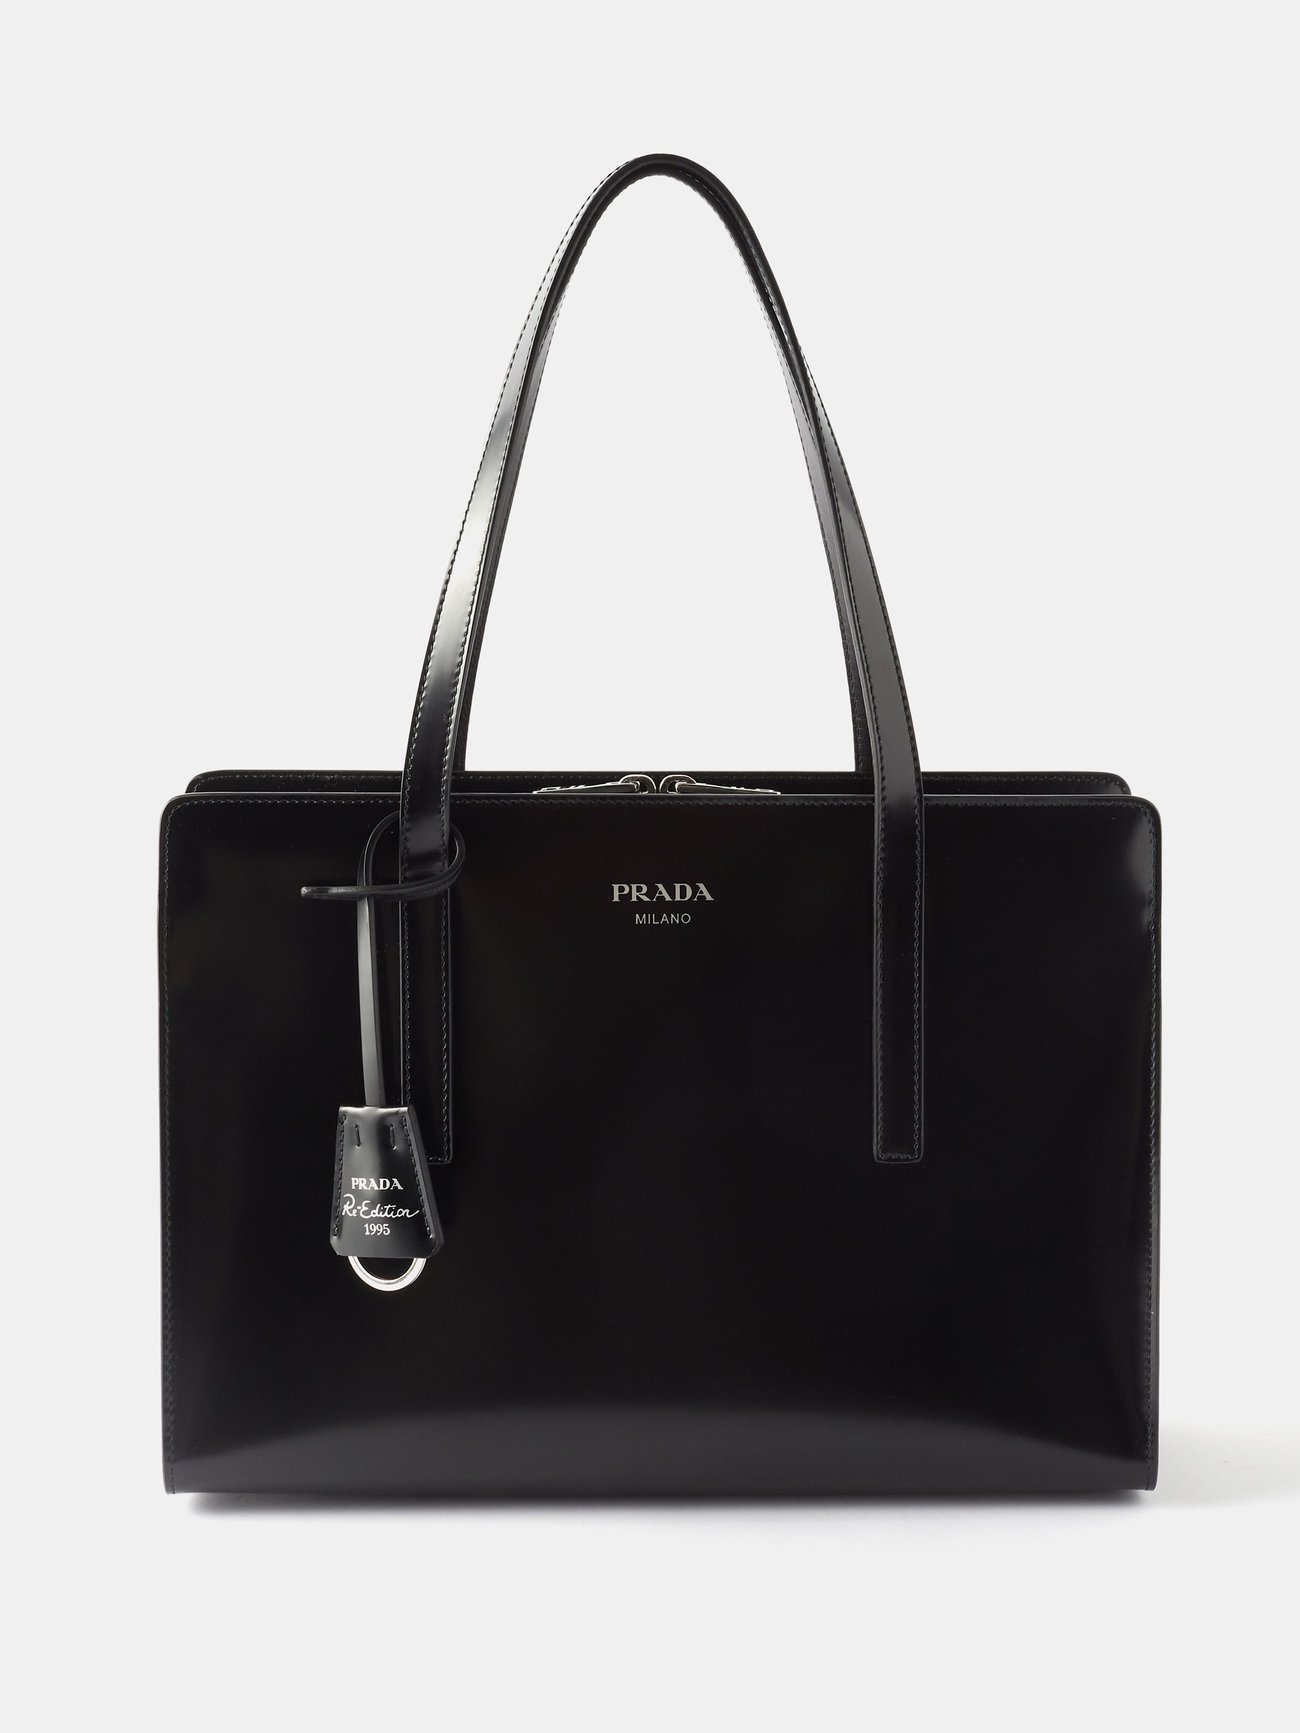  Prada Re-Edition 1995 Black Mini Bag